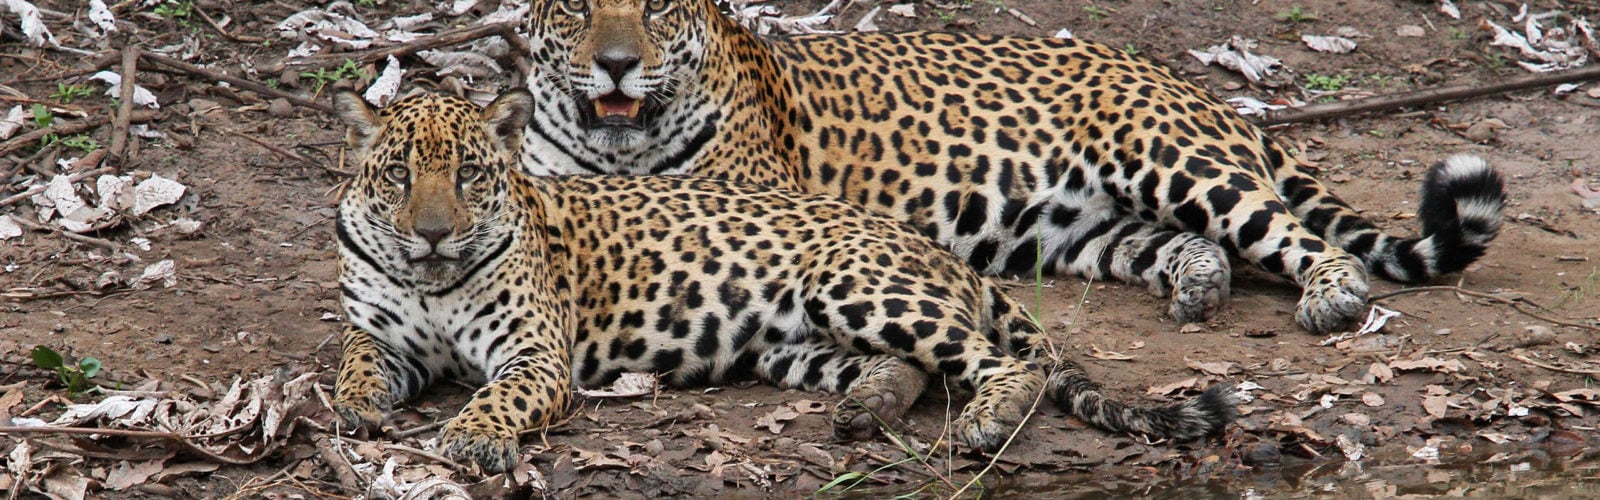 caiman-lodge-jaguar-mum-and-cub